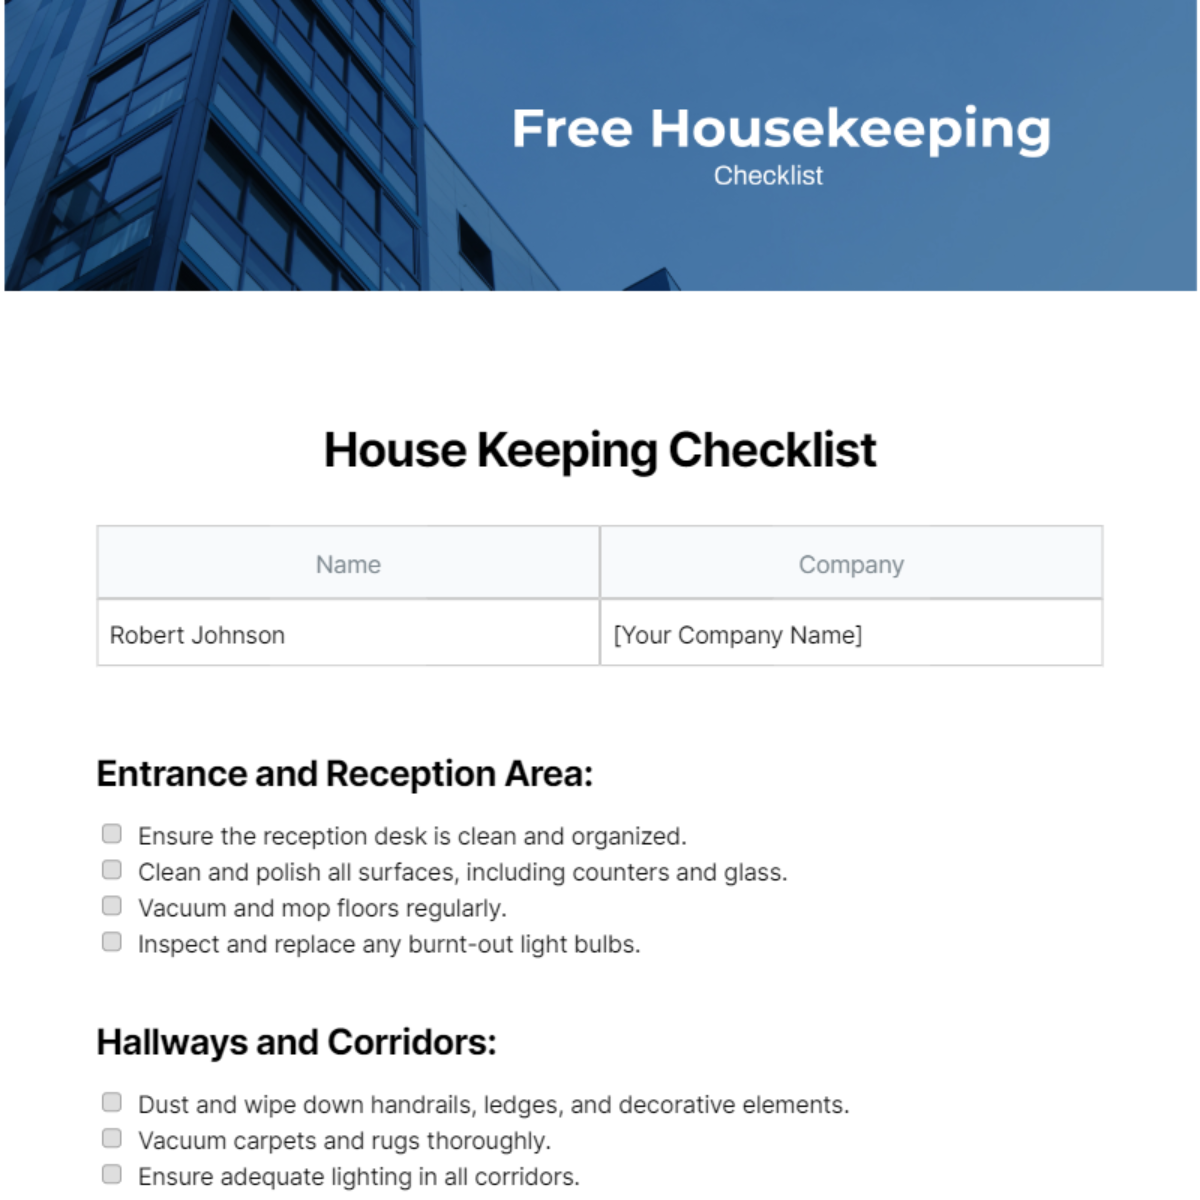 Housekeeping Checklist Template